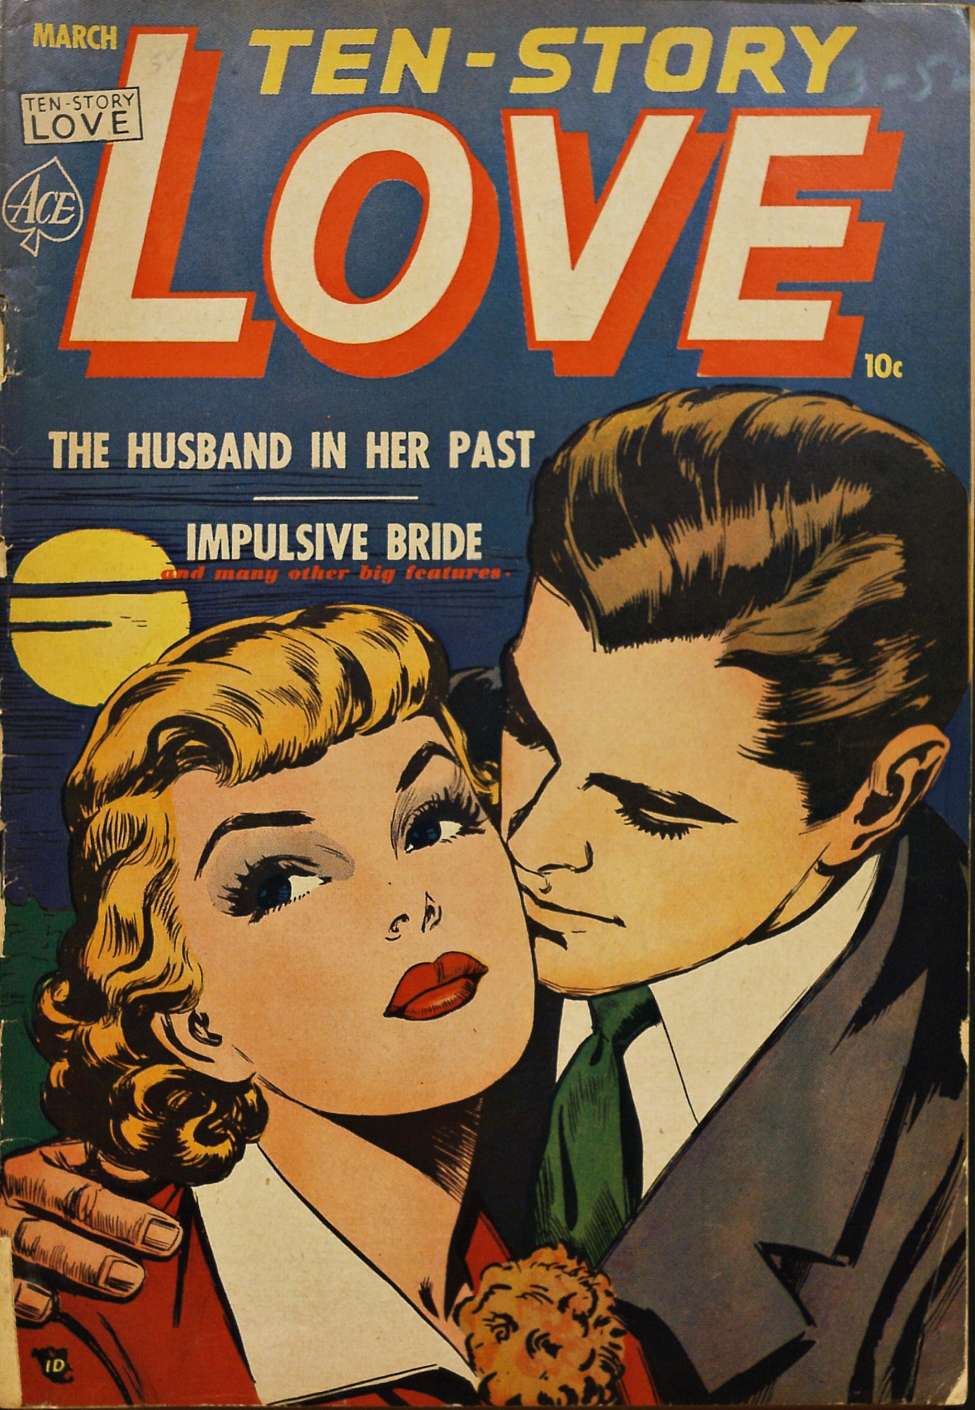 Comic Book Cover For Ten-Story Love v30 1 (181)